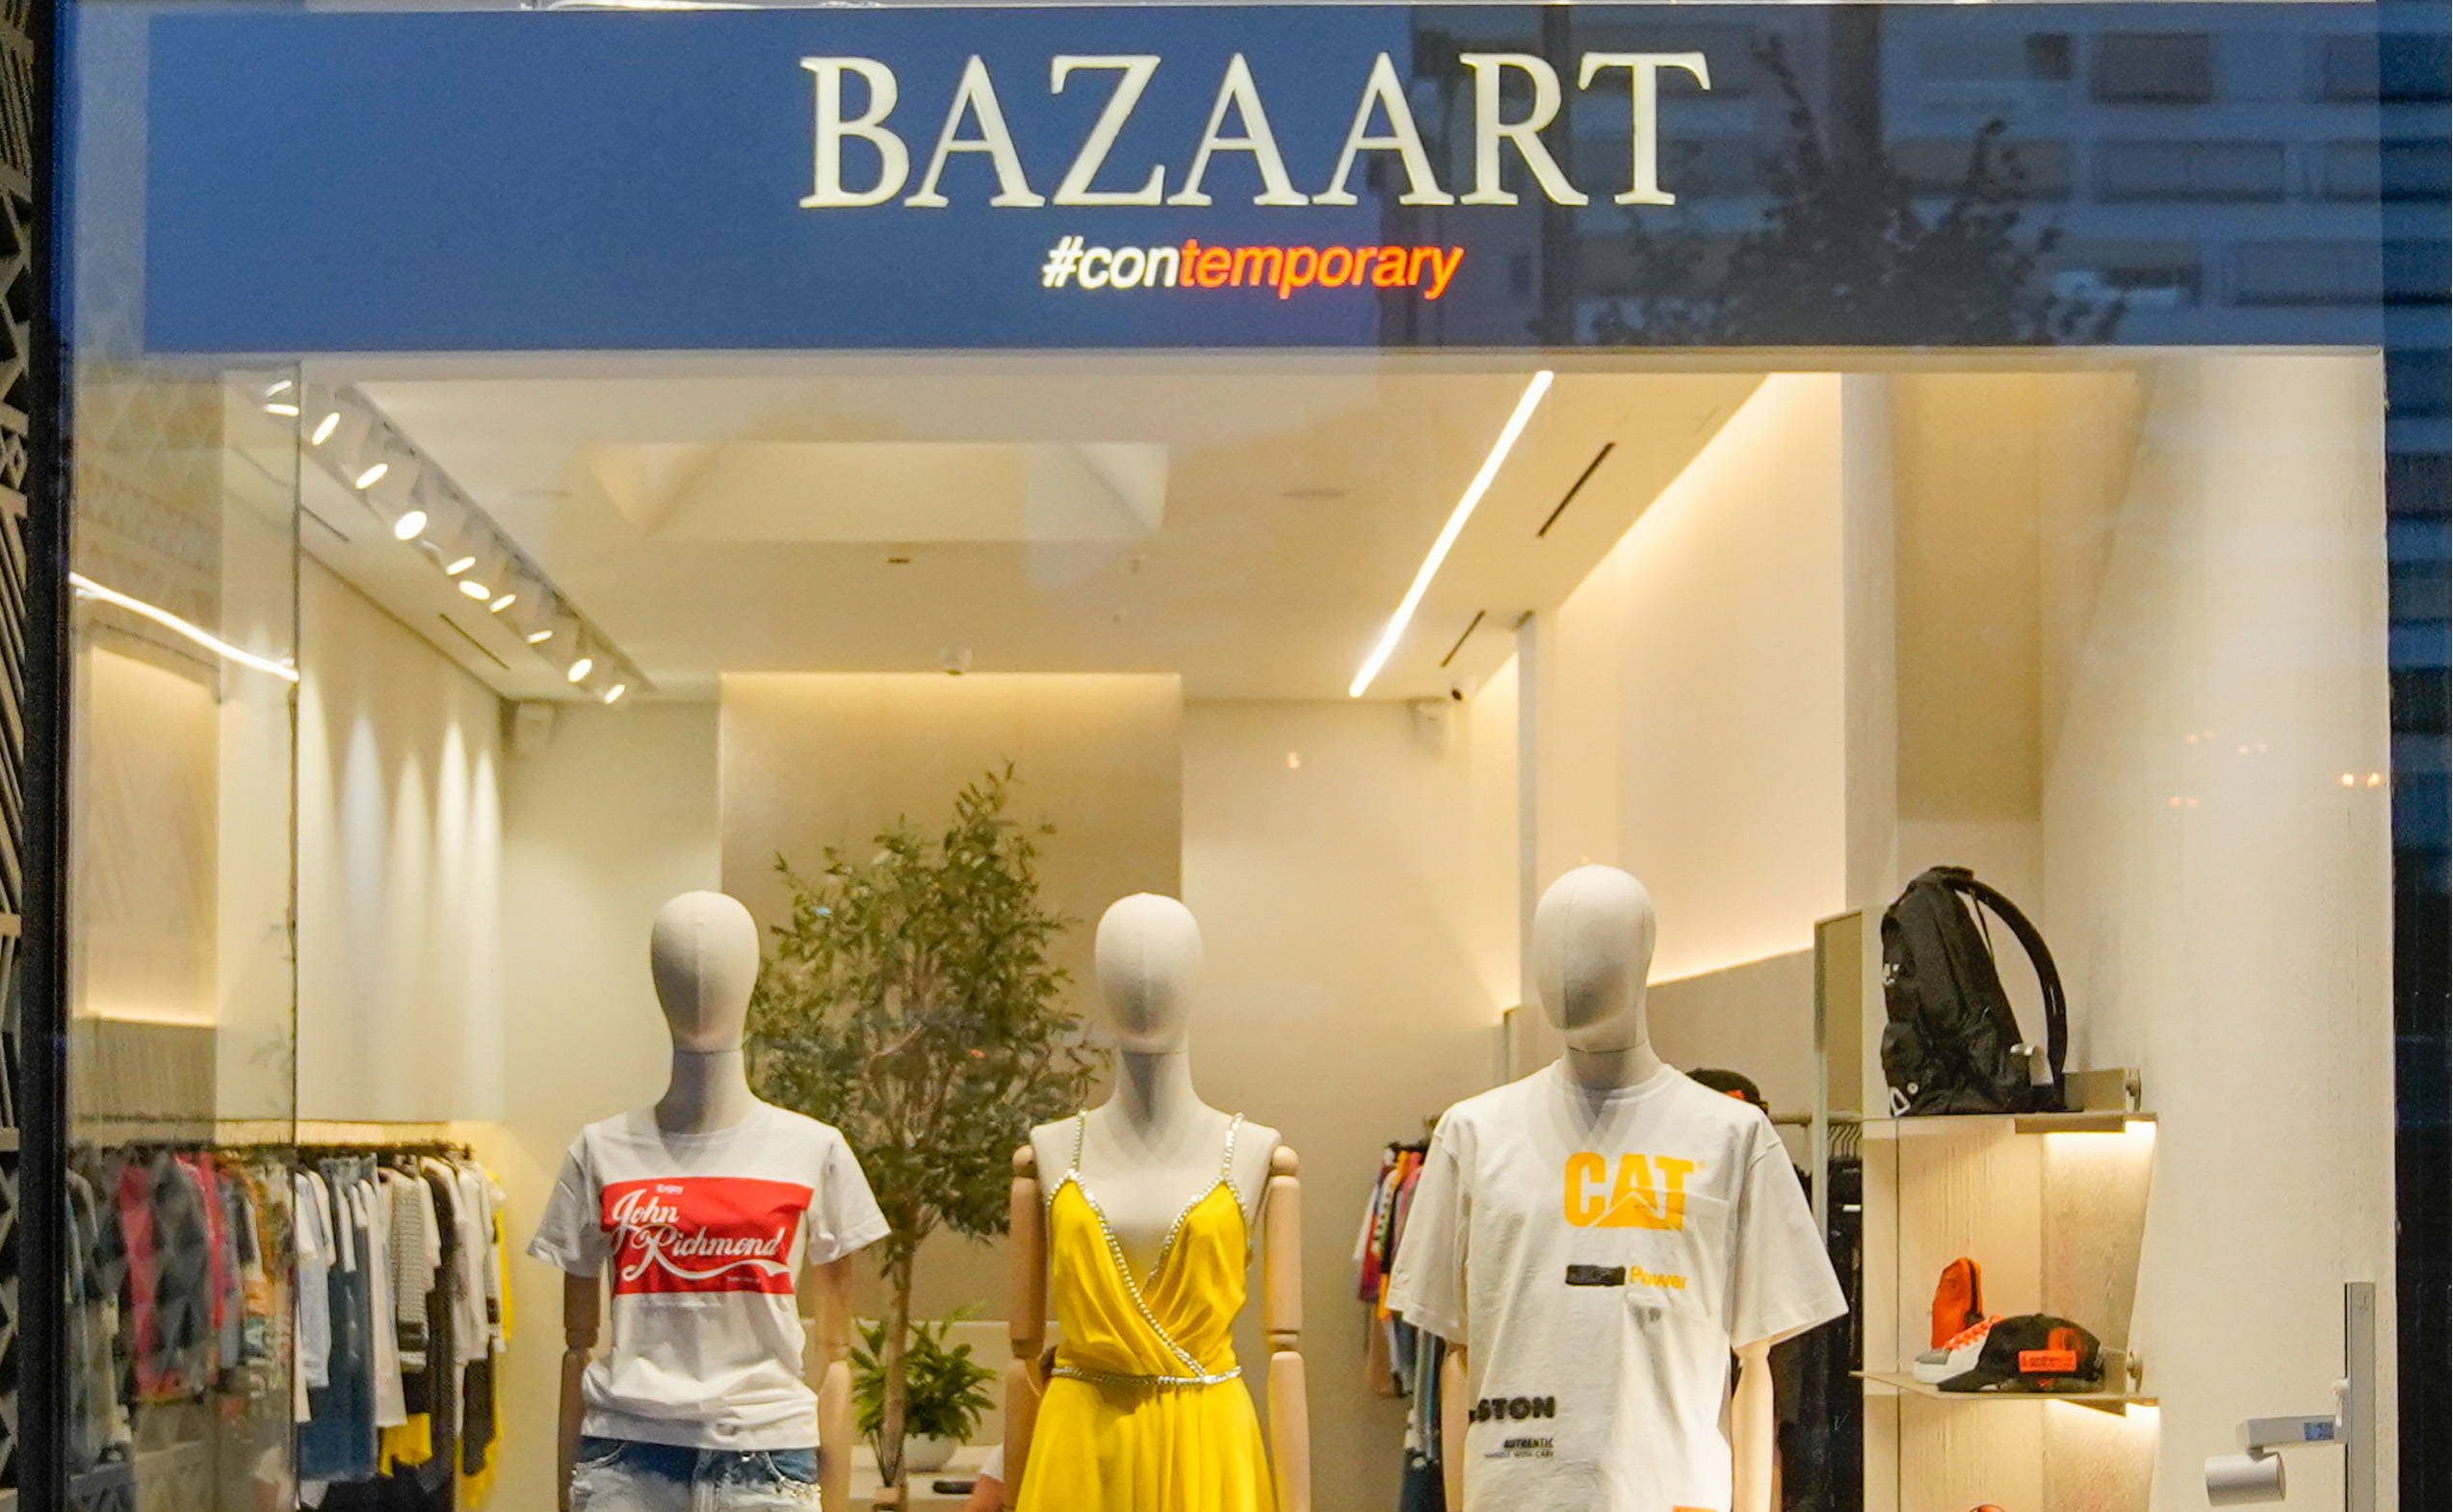 bazzart-contemporary-tirane